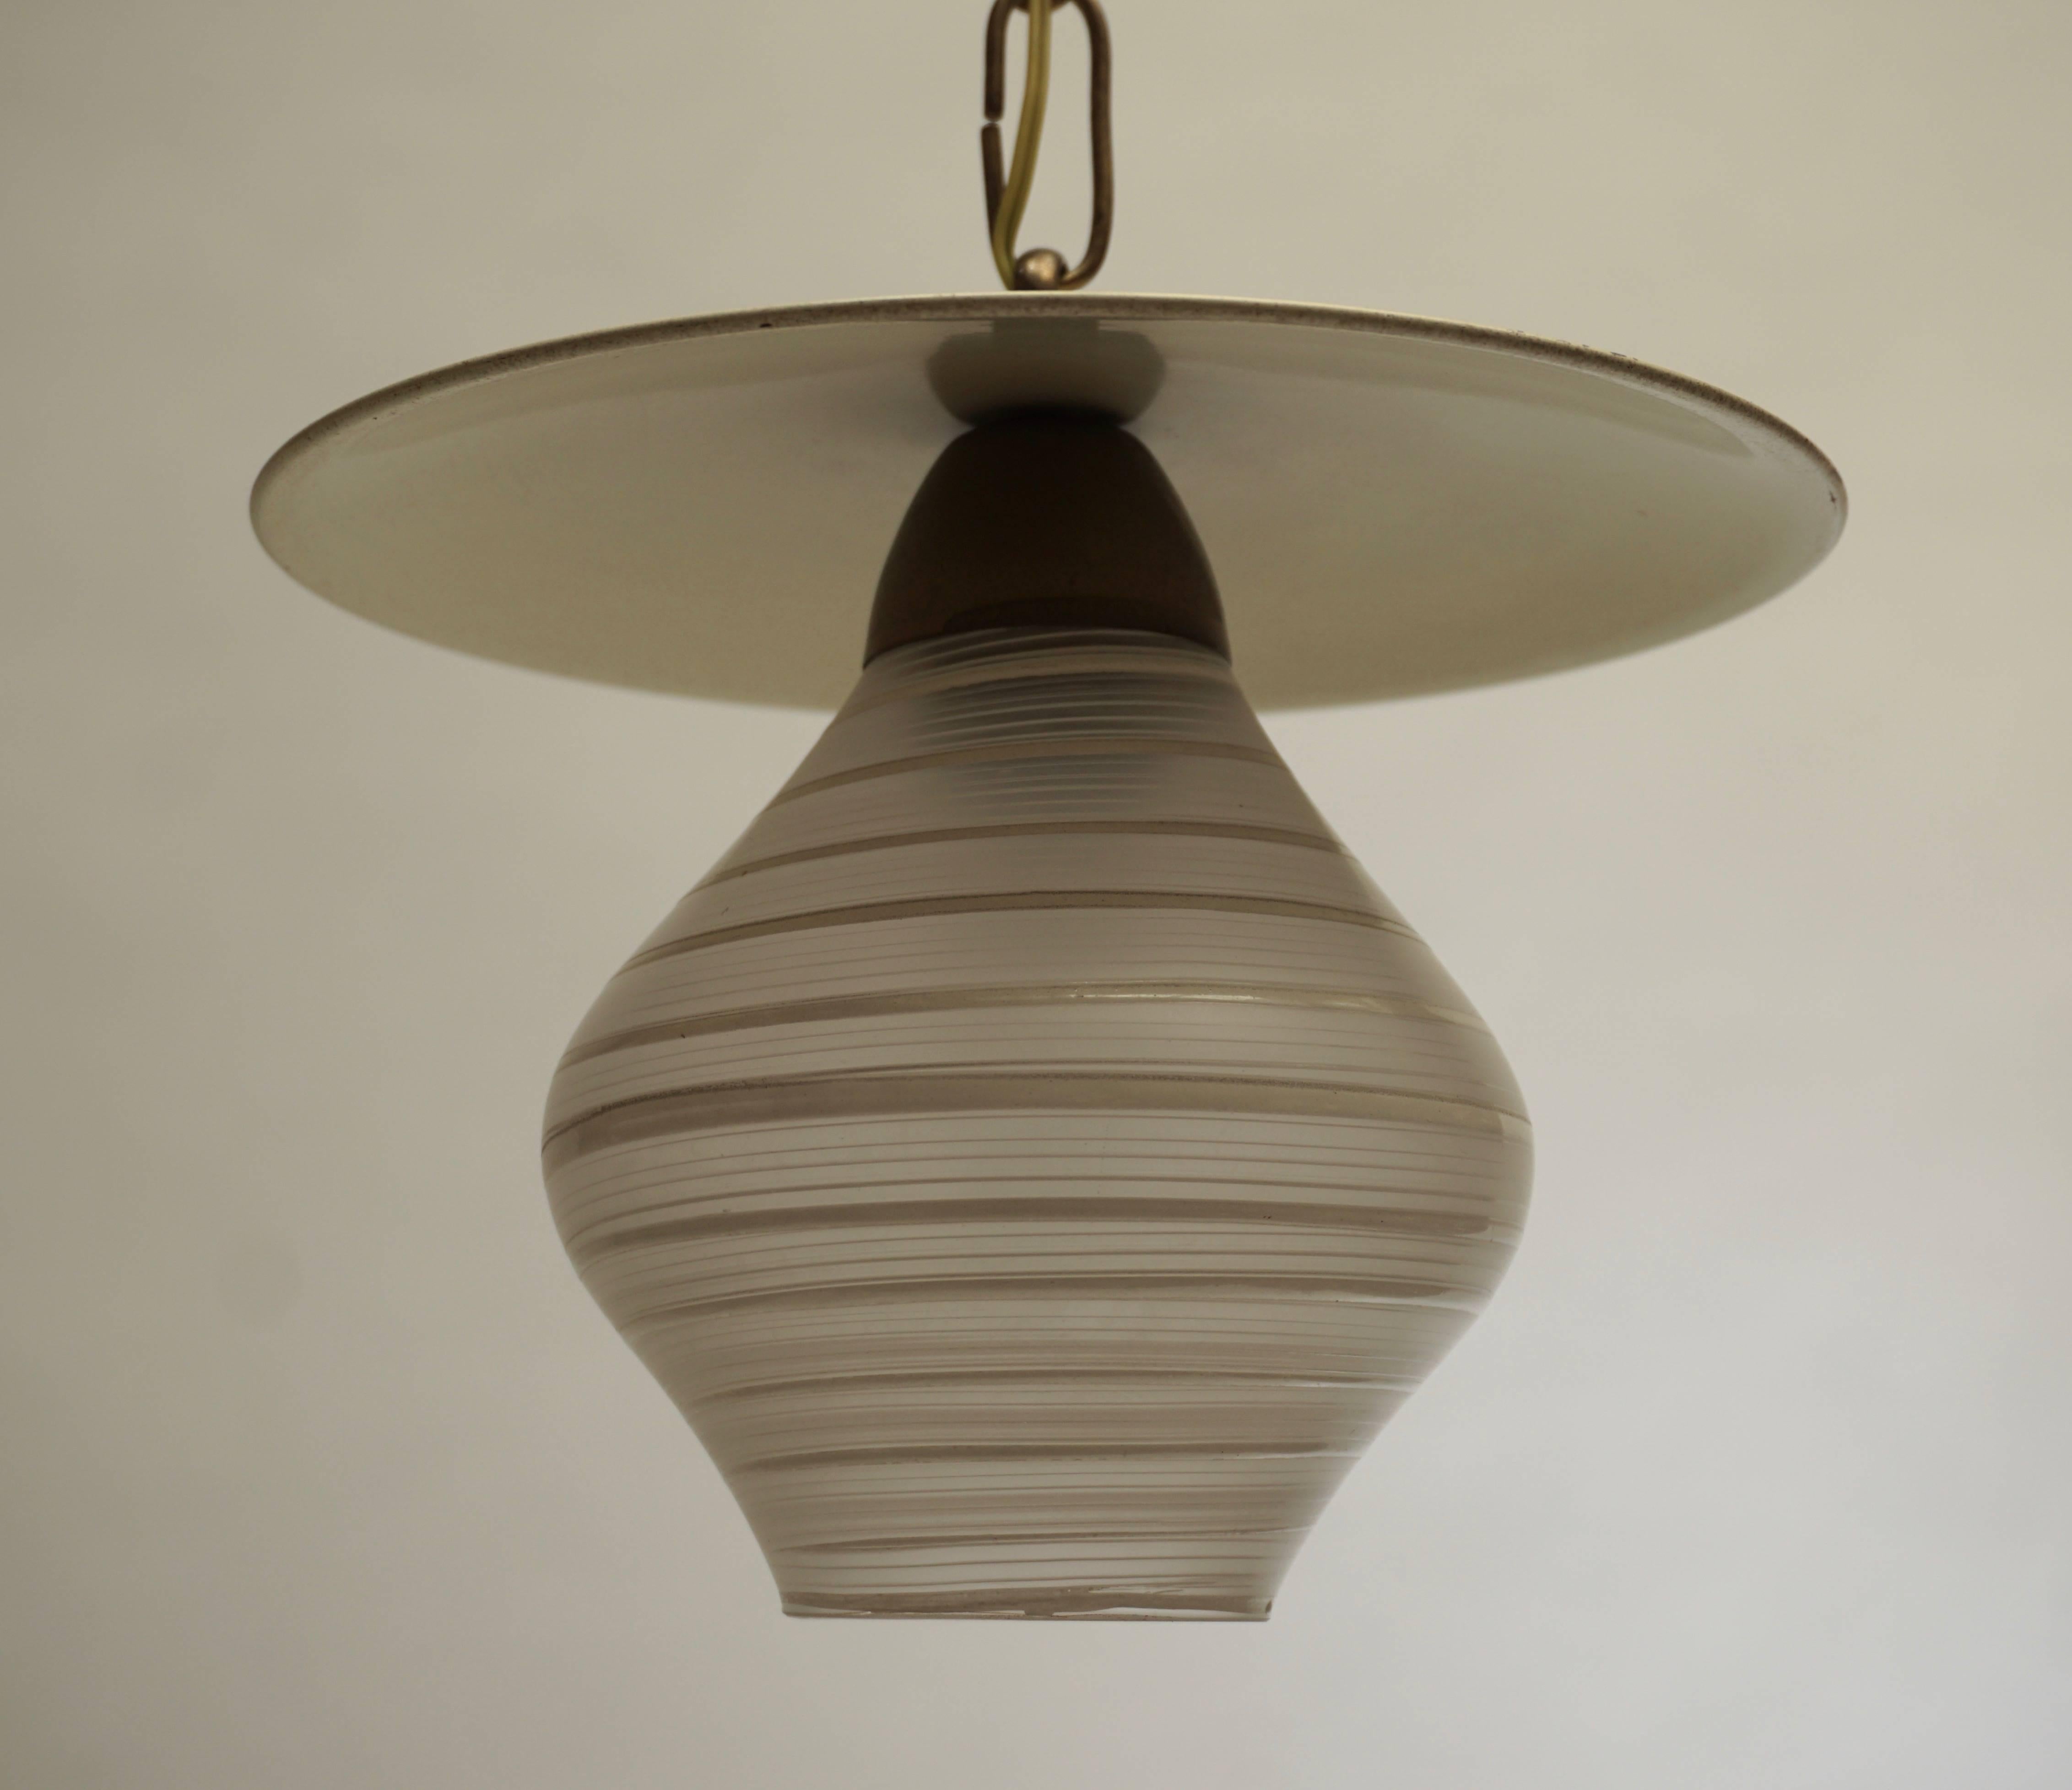 Murano glass pendant light.
Measure: 
Diameter 22 cm.
Height fixture 17 cm.
Total height 50 cm.